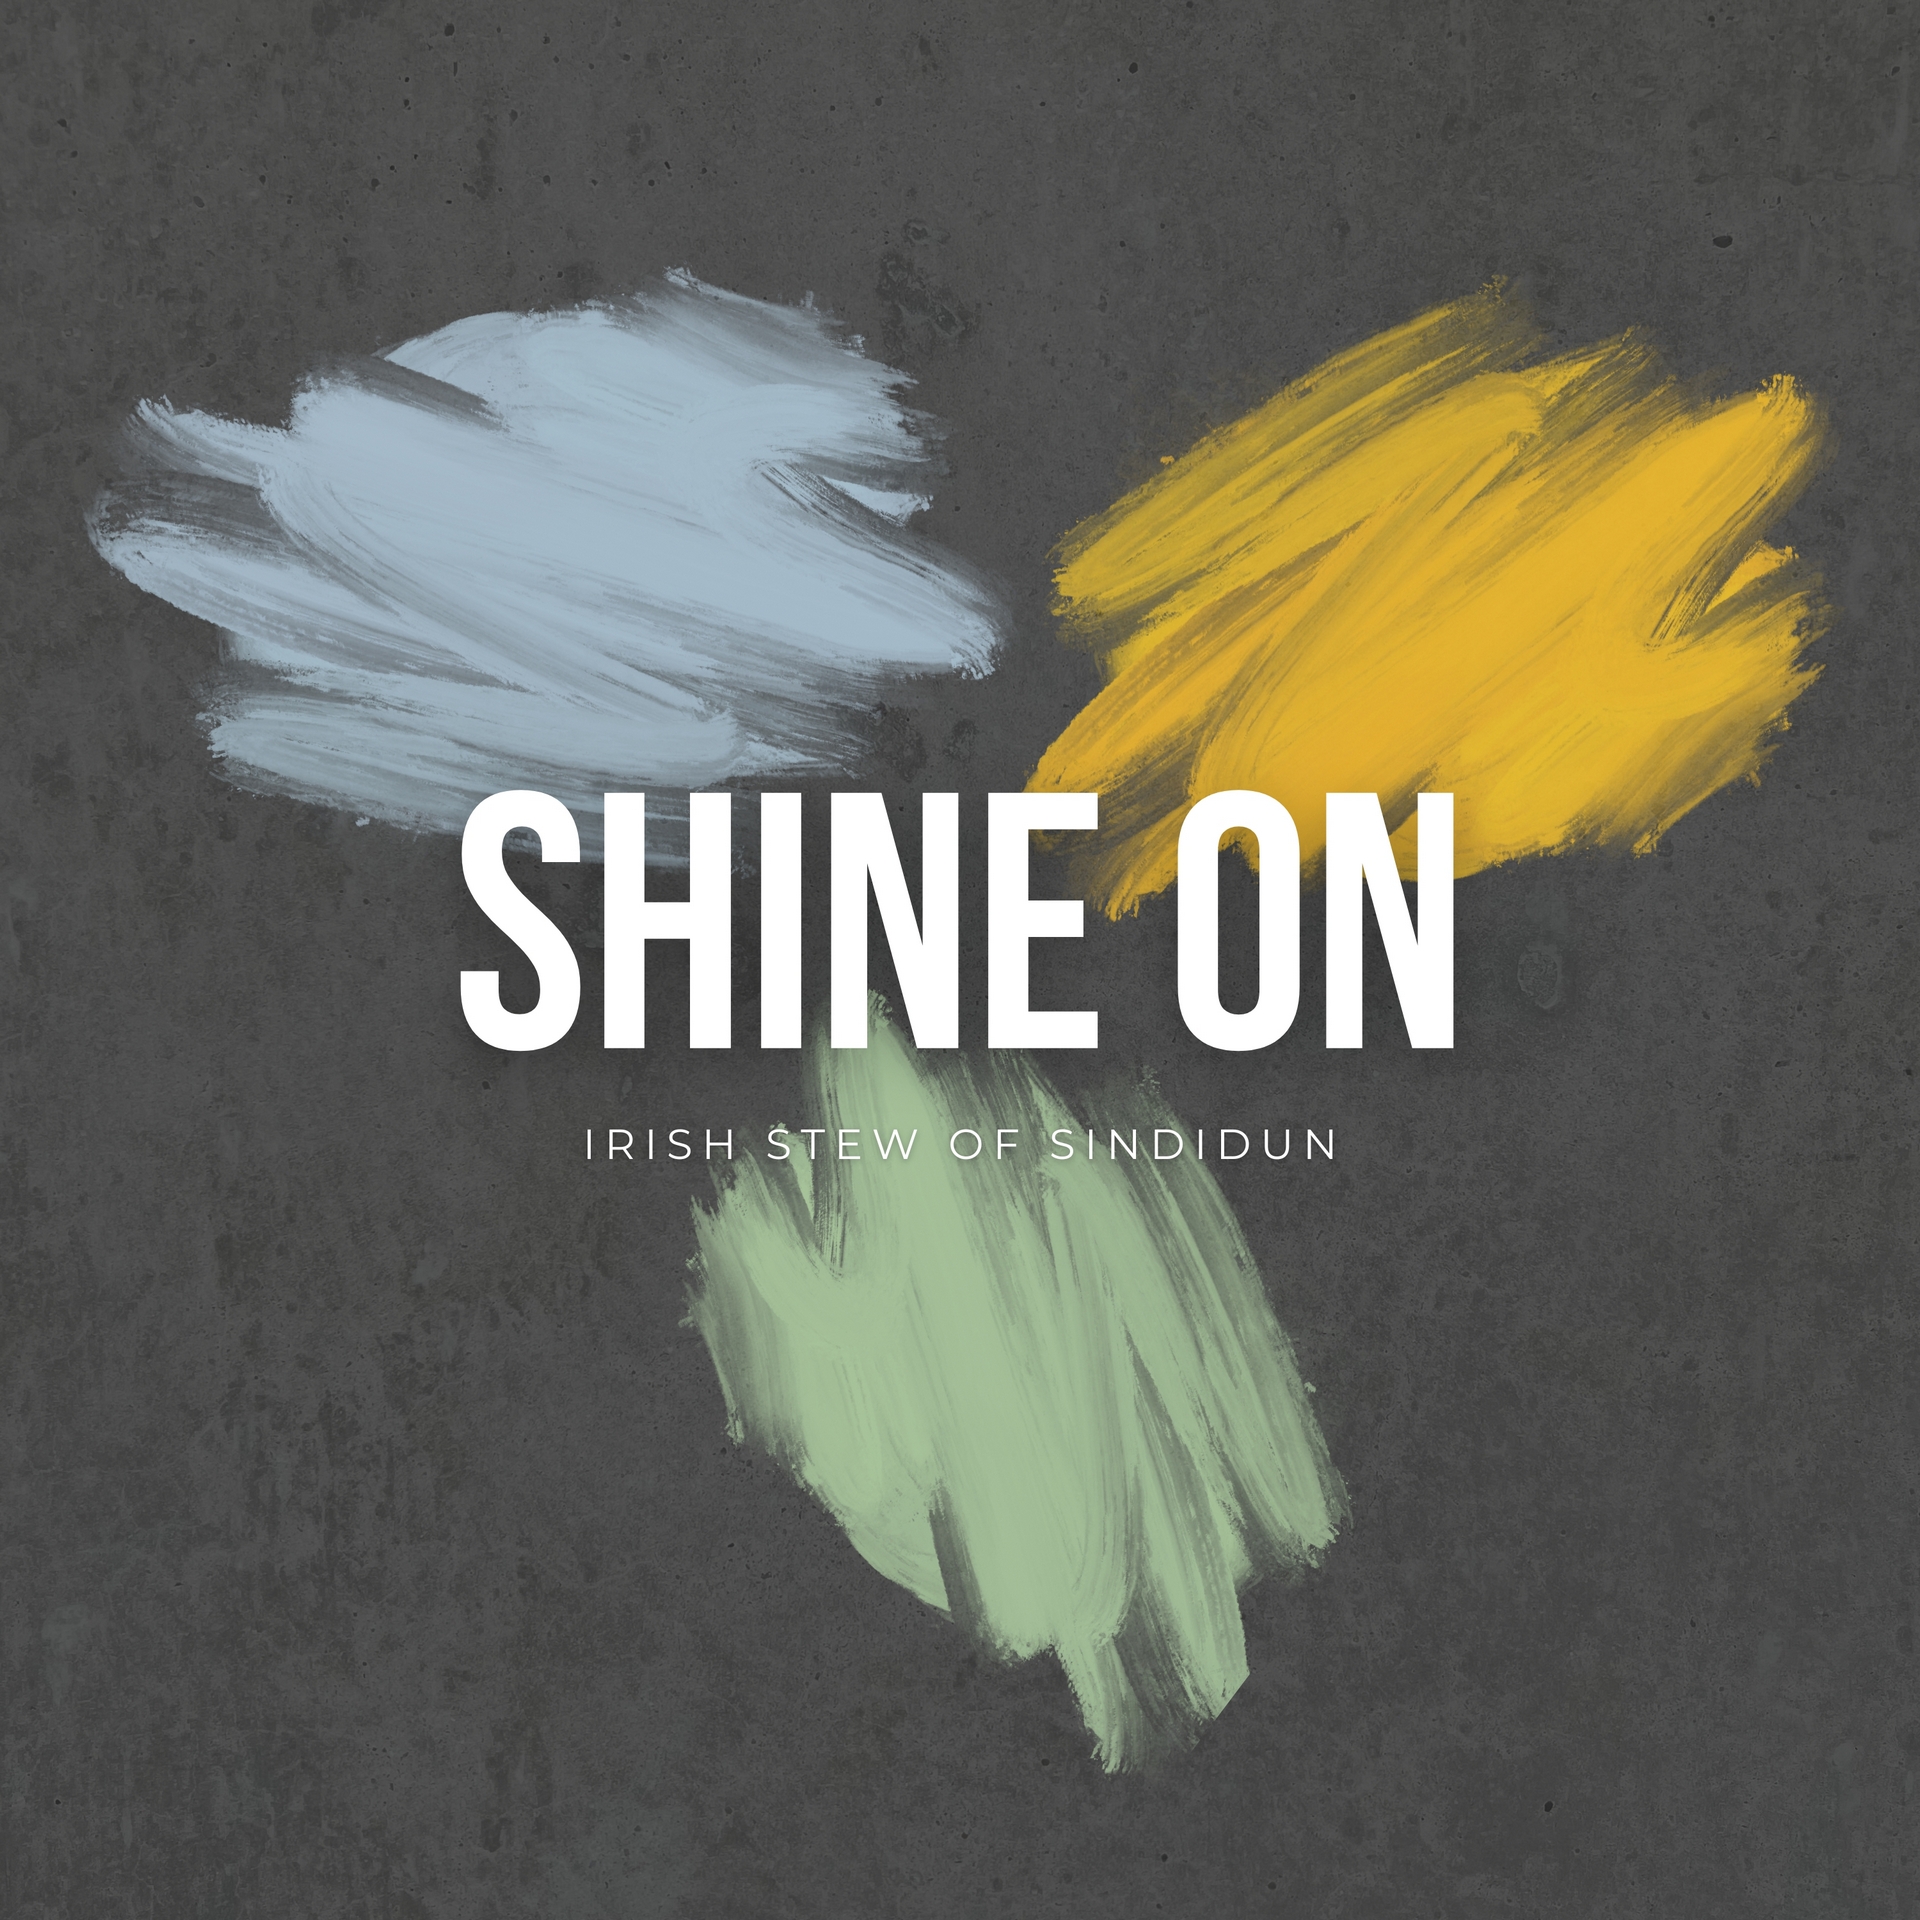 Shine On - Irish Stew of Sindidun